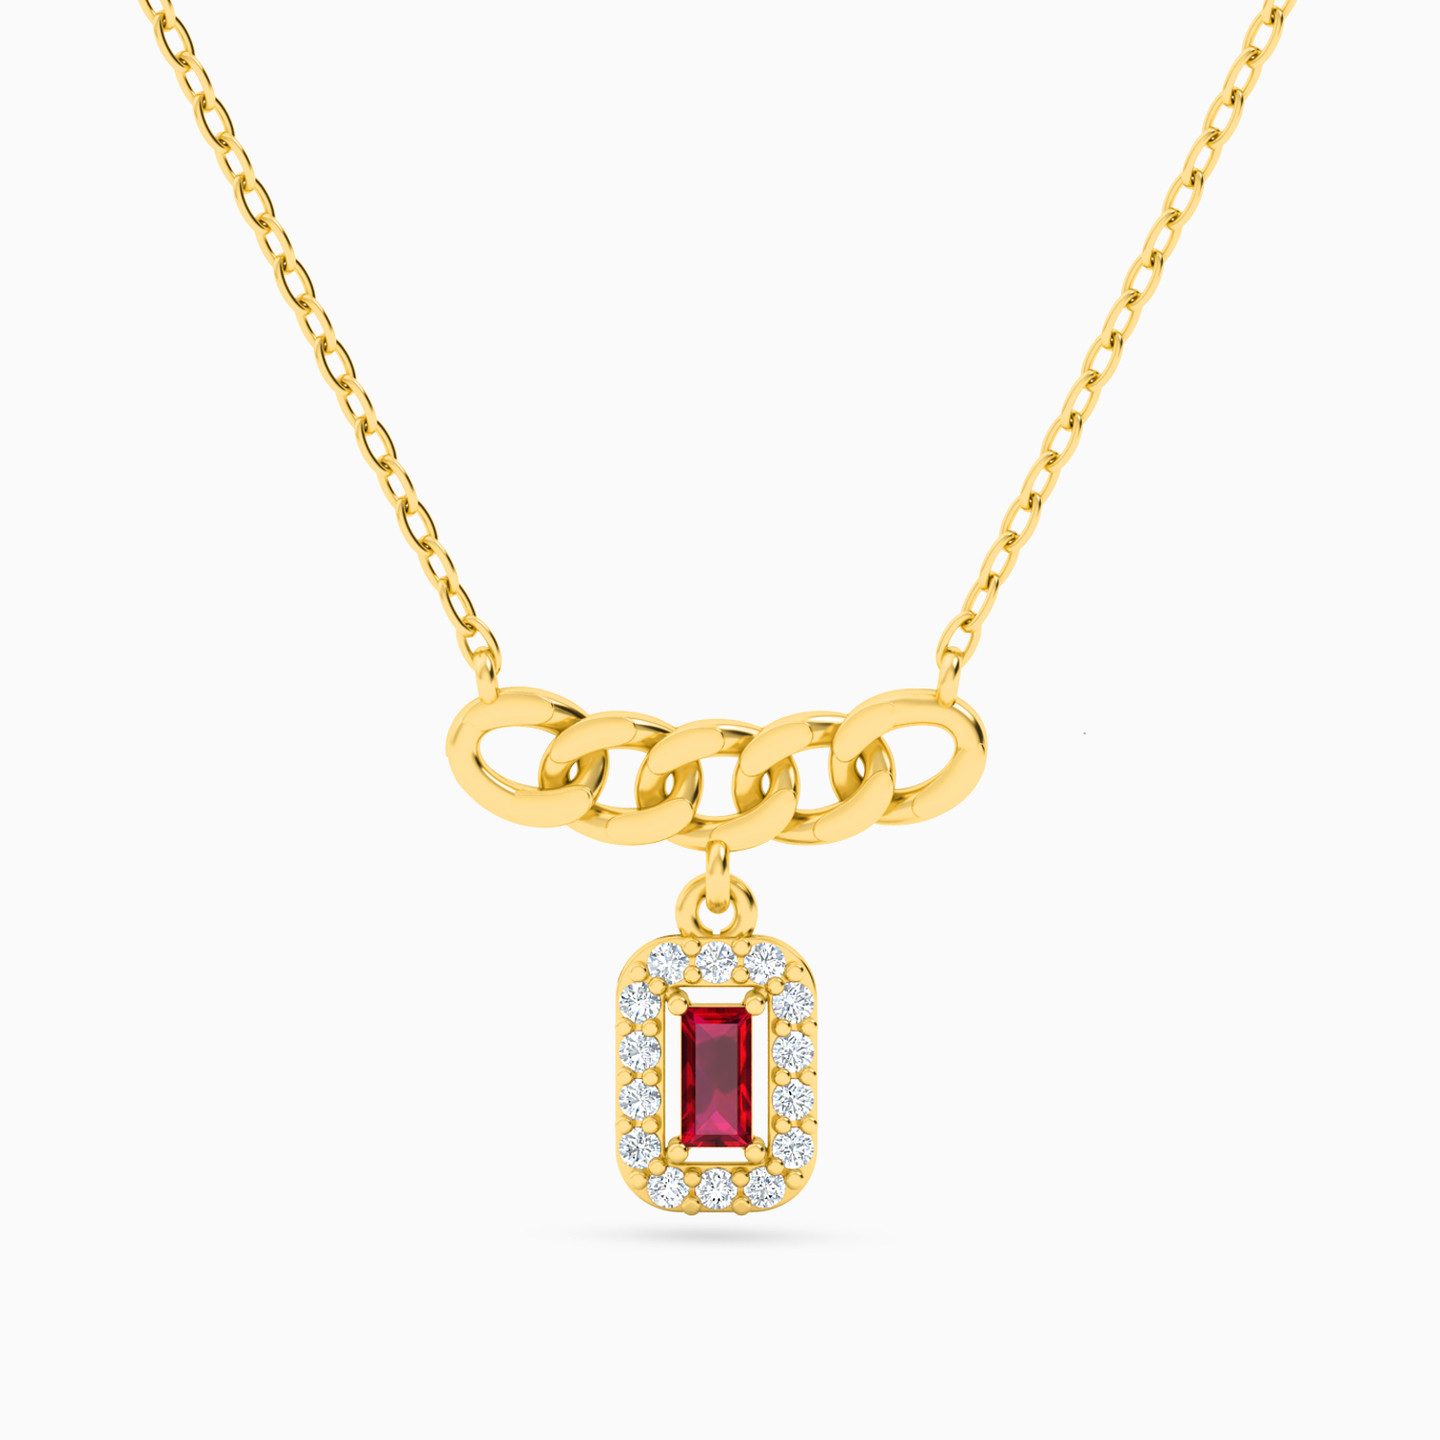 18K Gold Colored Stones Pendant Necklace